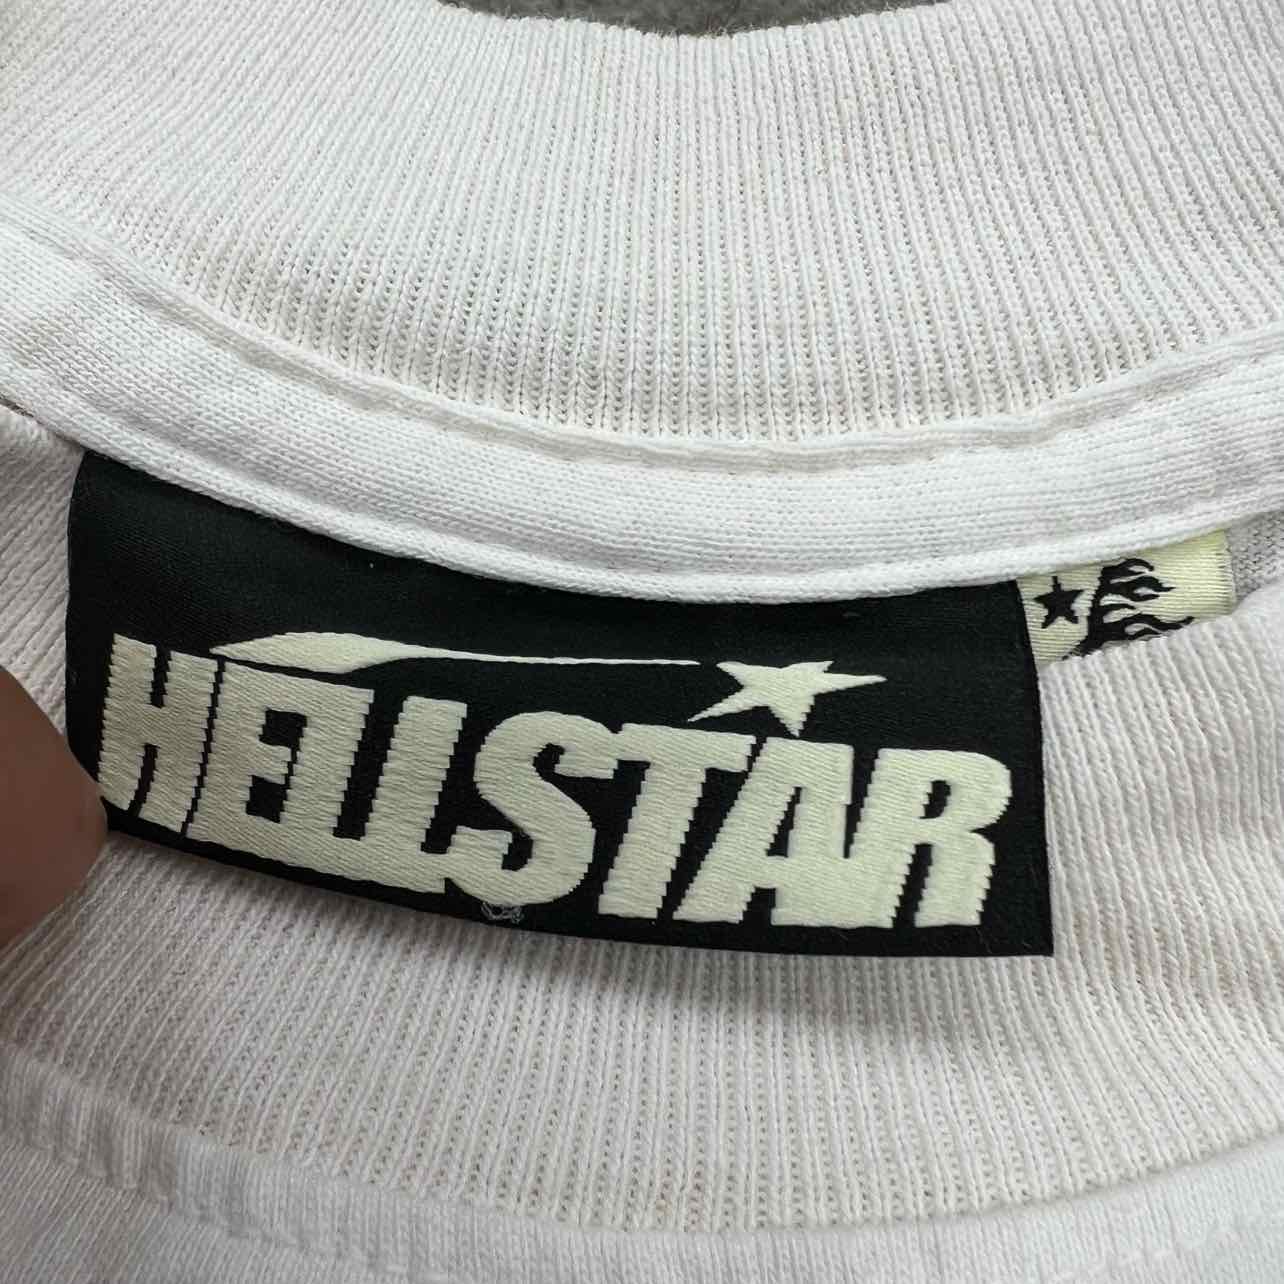 Hellstar T-Shirt "FRANKENKID" Cream New Size S